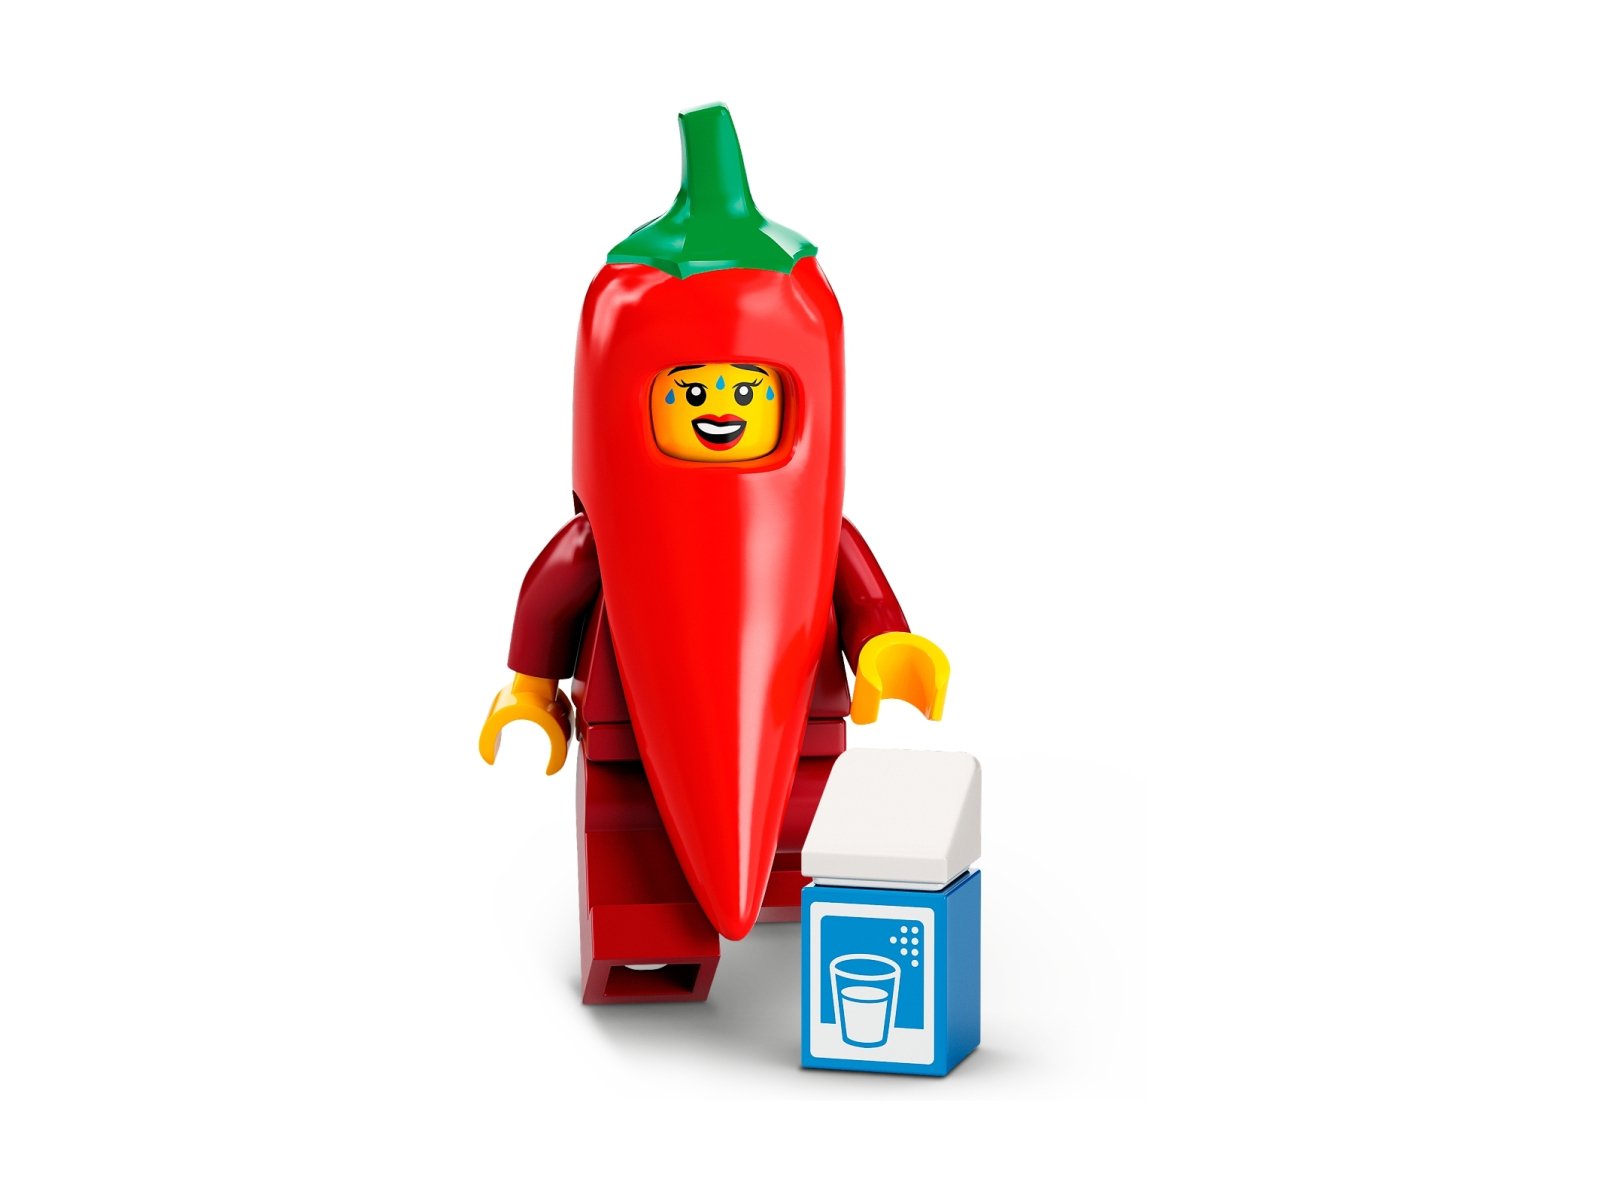 LEGO Minifigures Seria 22 71032